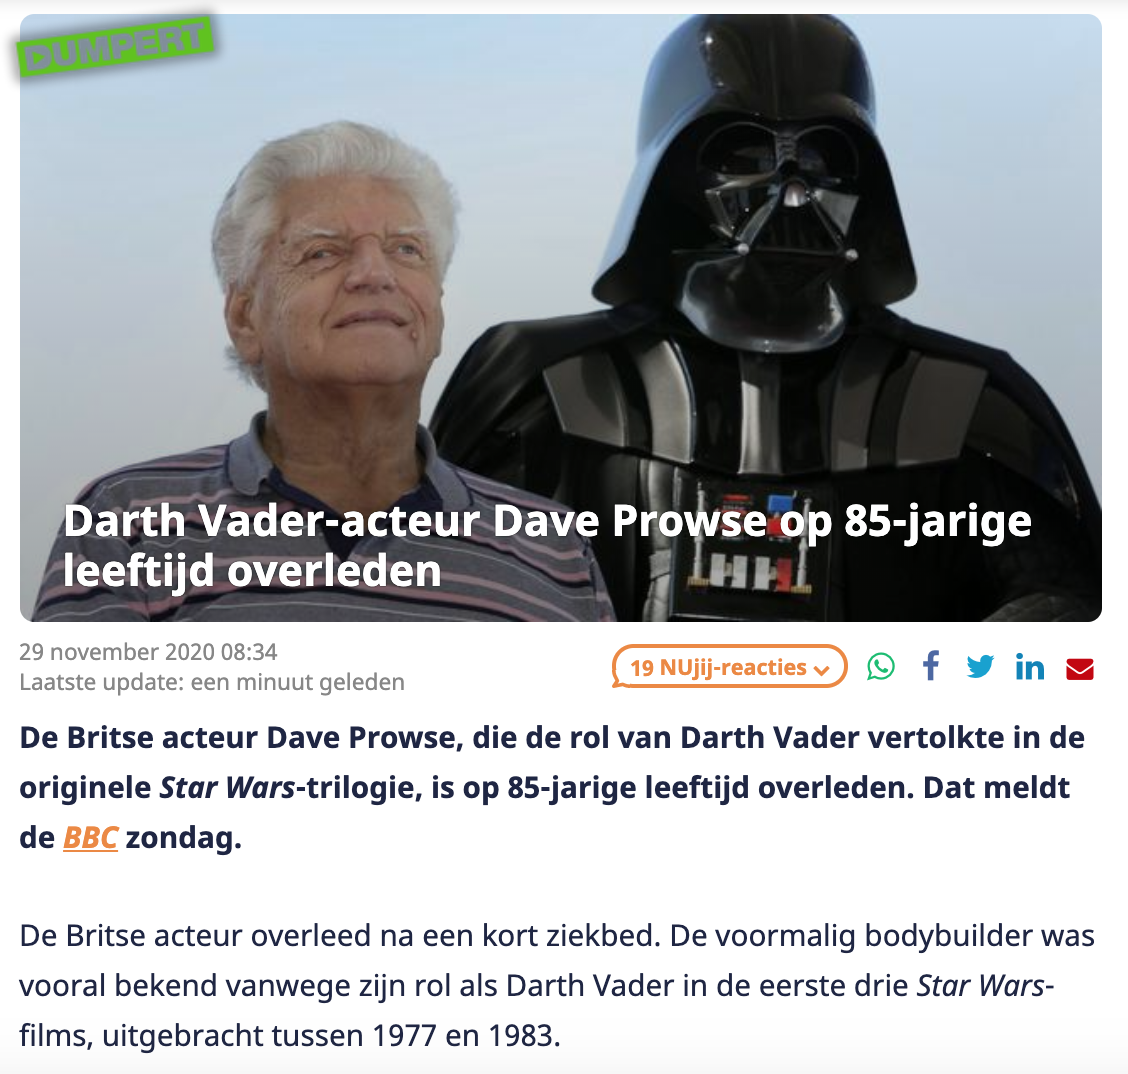 RIP Darth Vader-acteur Dave Prowse